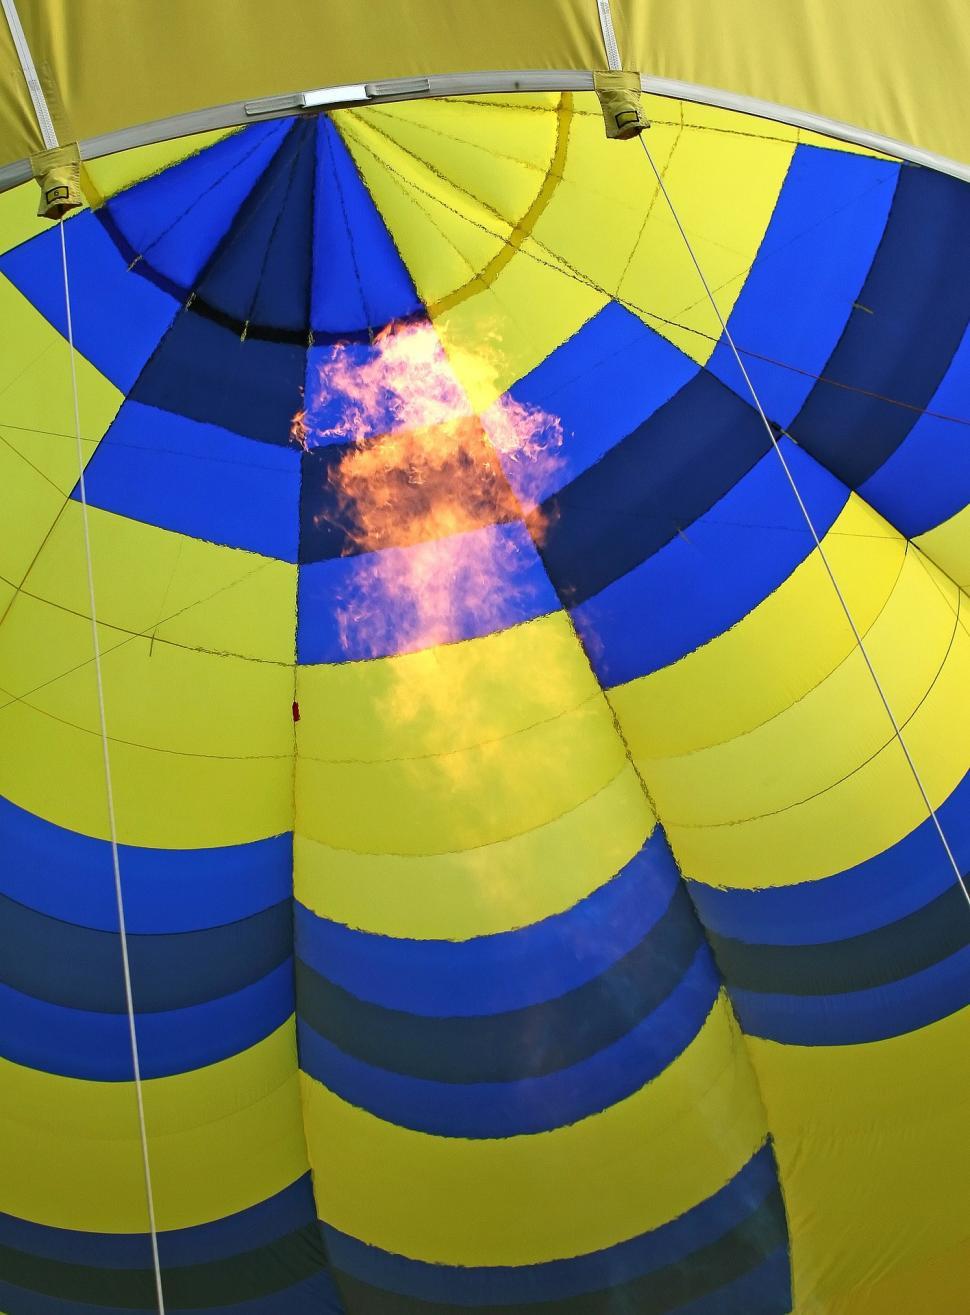 Free Image of hot air hot air balloon inside heat flame balloon aircraft color parachute sky 